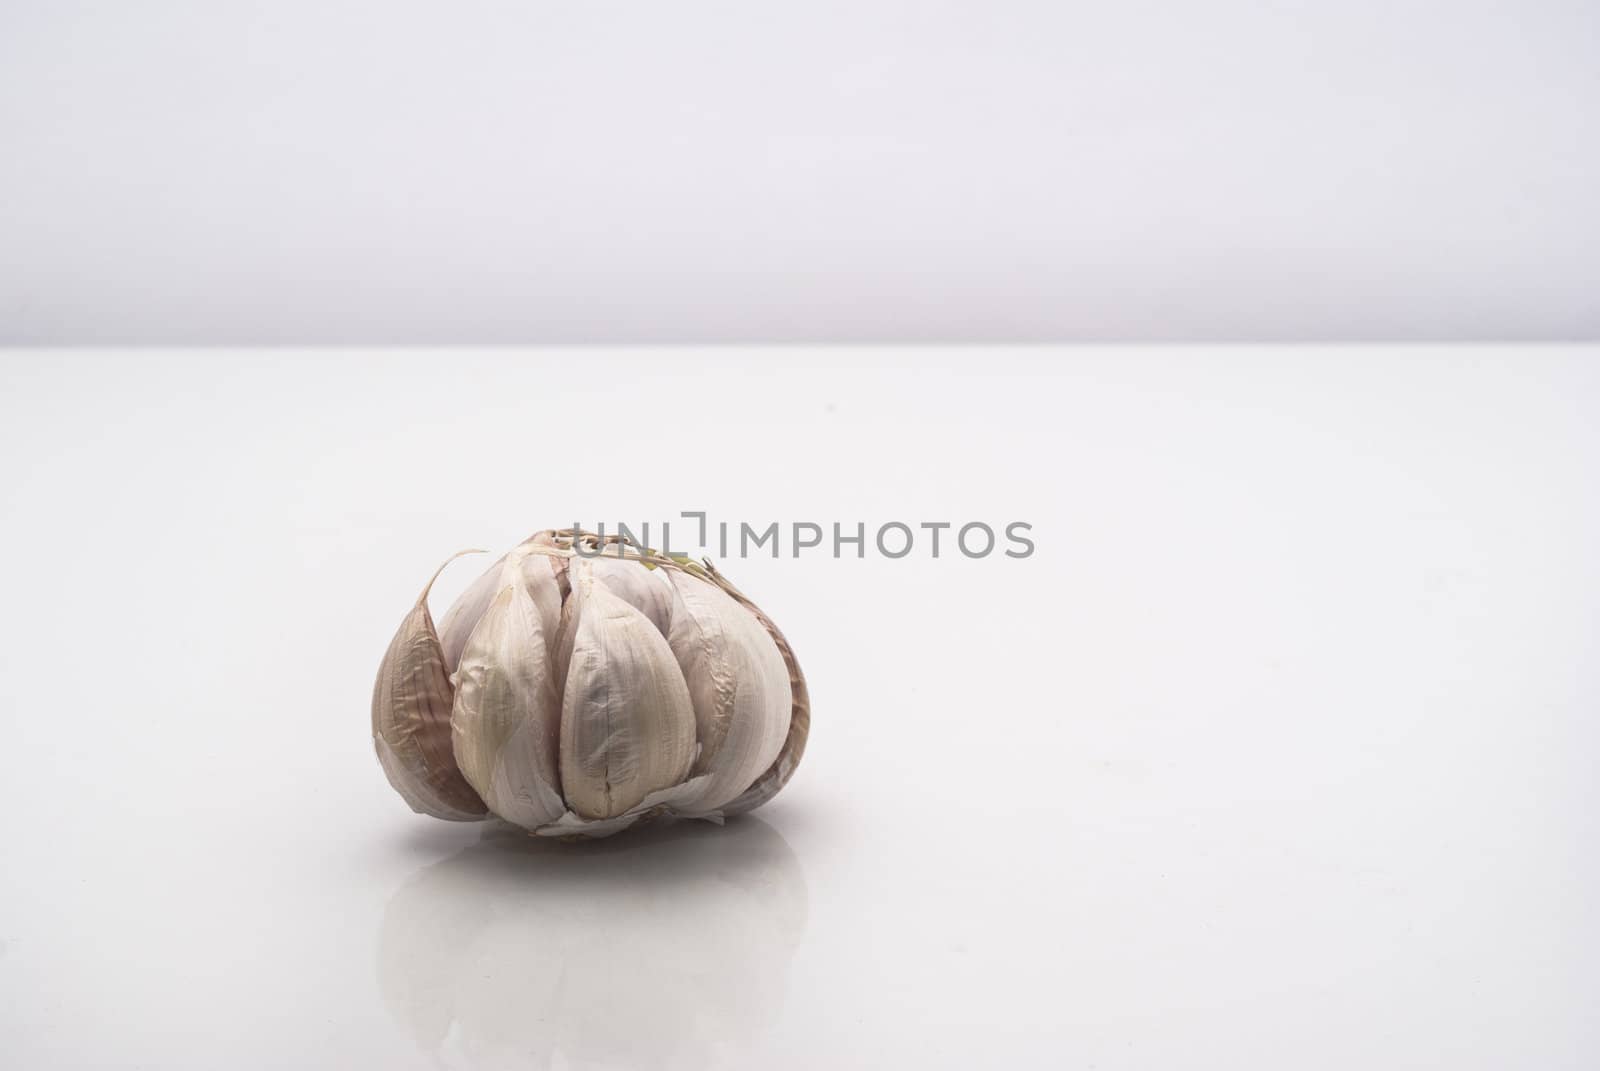 Garlic vegetable closeup isolated on white background